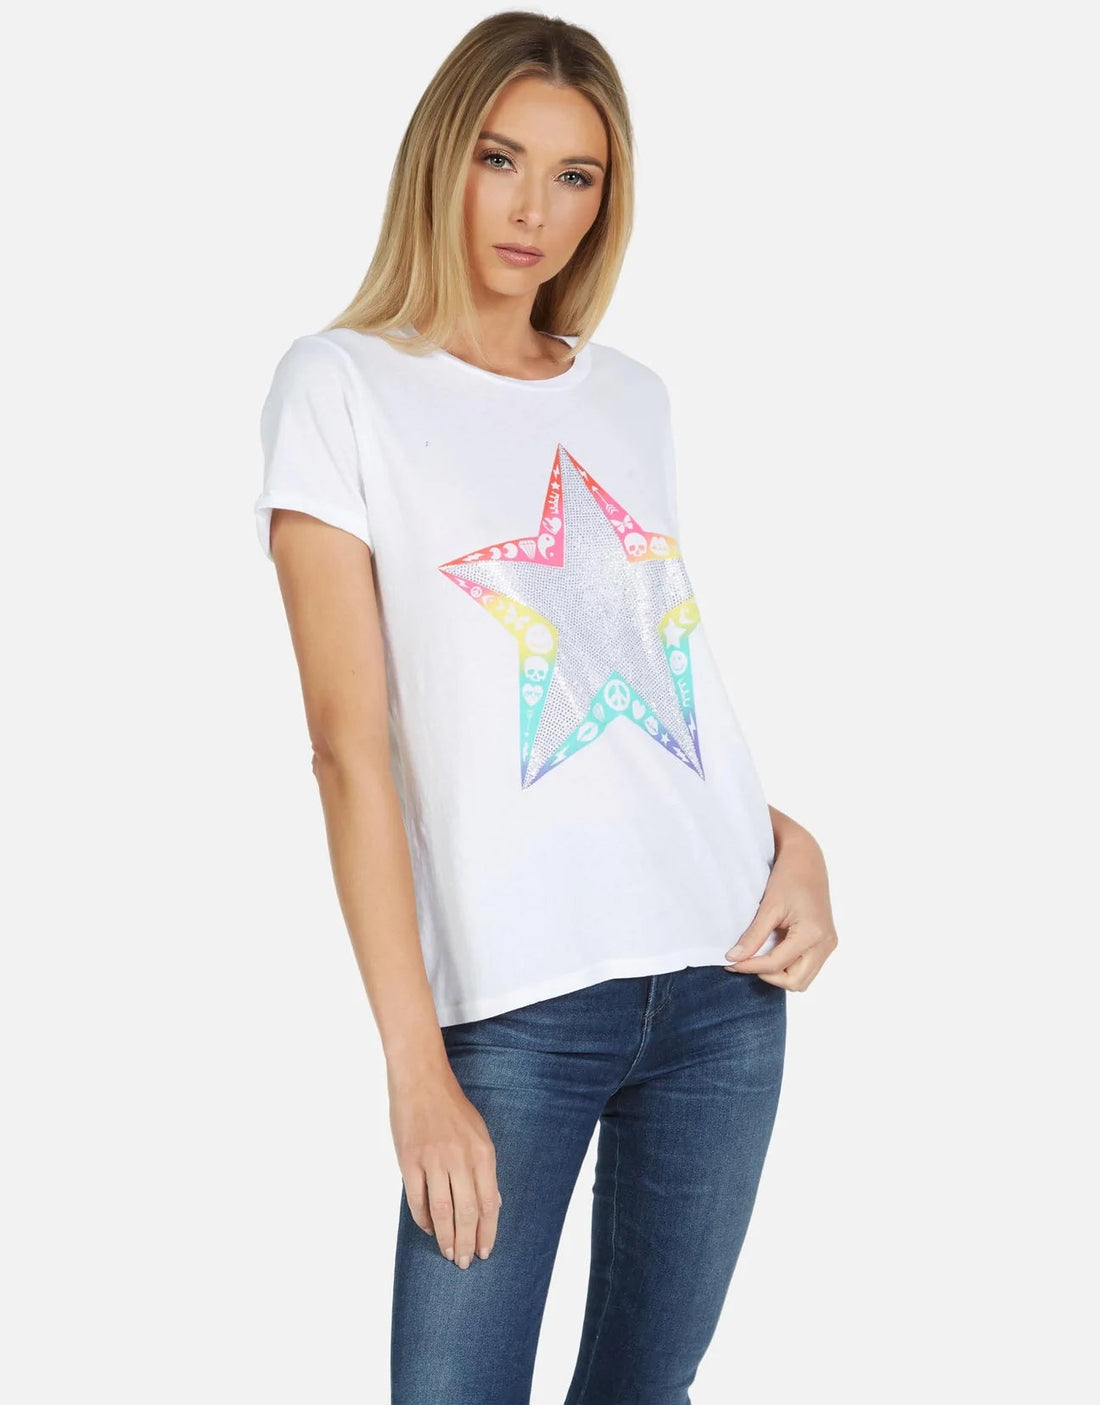 Shop Lauren Moshi Edda Elements Star T-Shirt - Premium T-Shirt from Lauren Moshi Online now at Spoiled Brat 